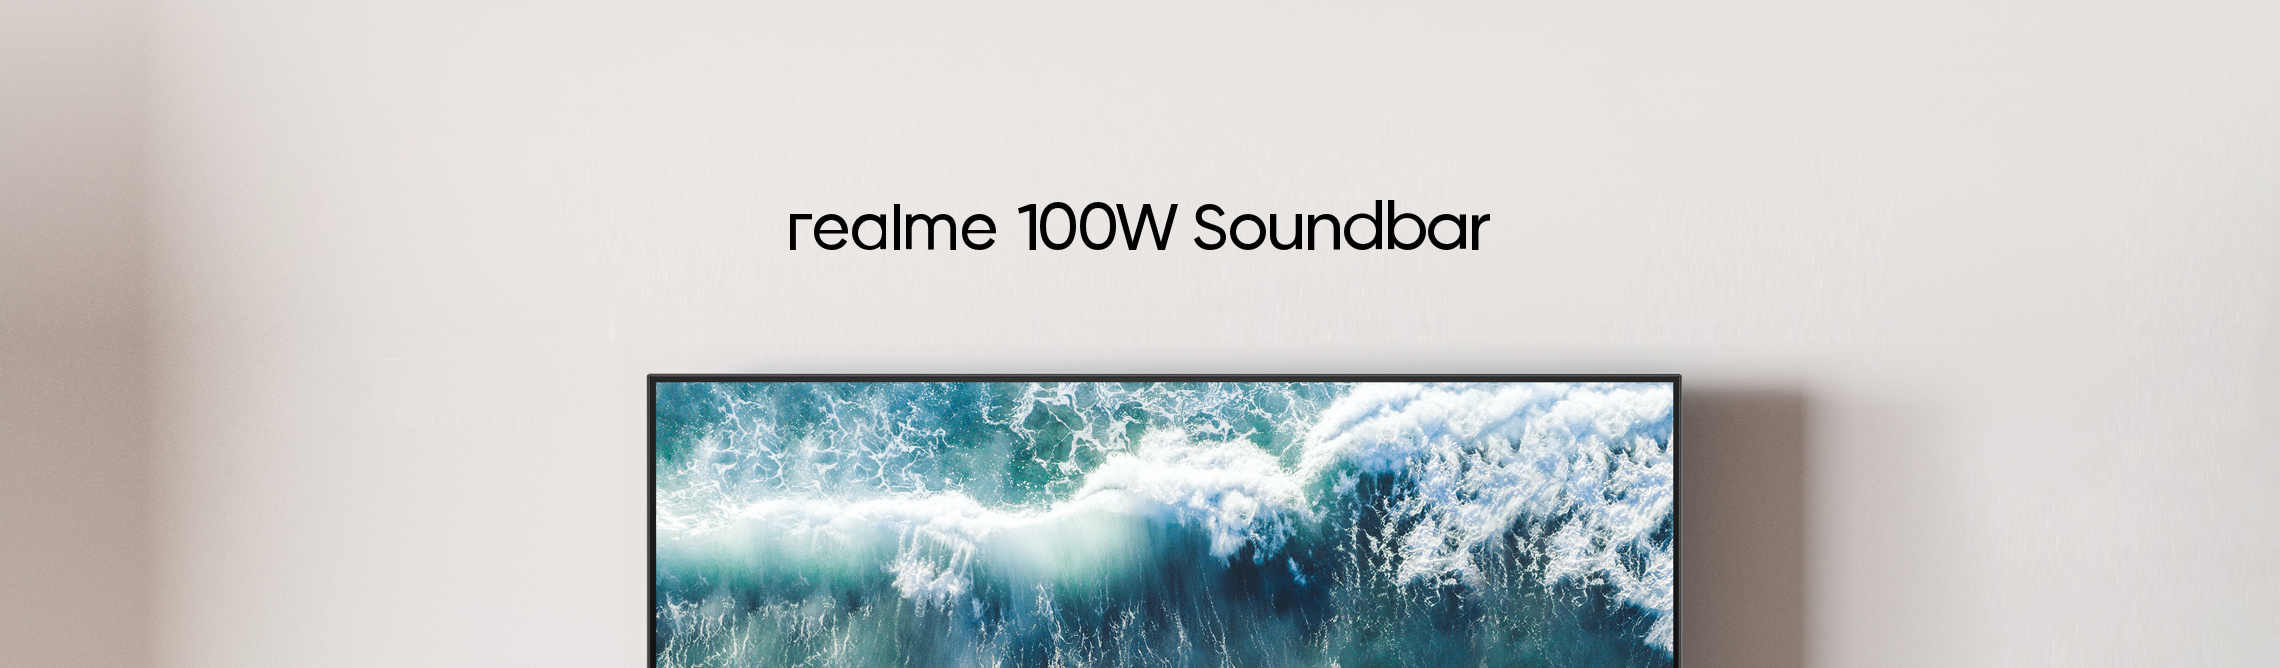 Realme-100W-bluetooth-Soundbar-Home-Theater-21-Channel-60W-Full-range-Speaker-40W-Bass-Subwoofer-Aud-1811220-1